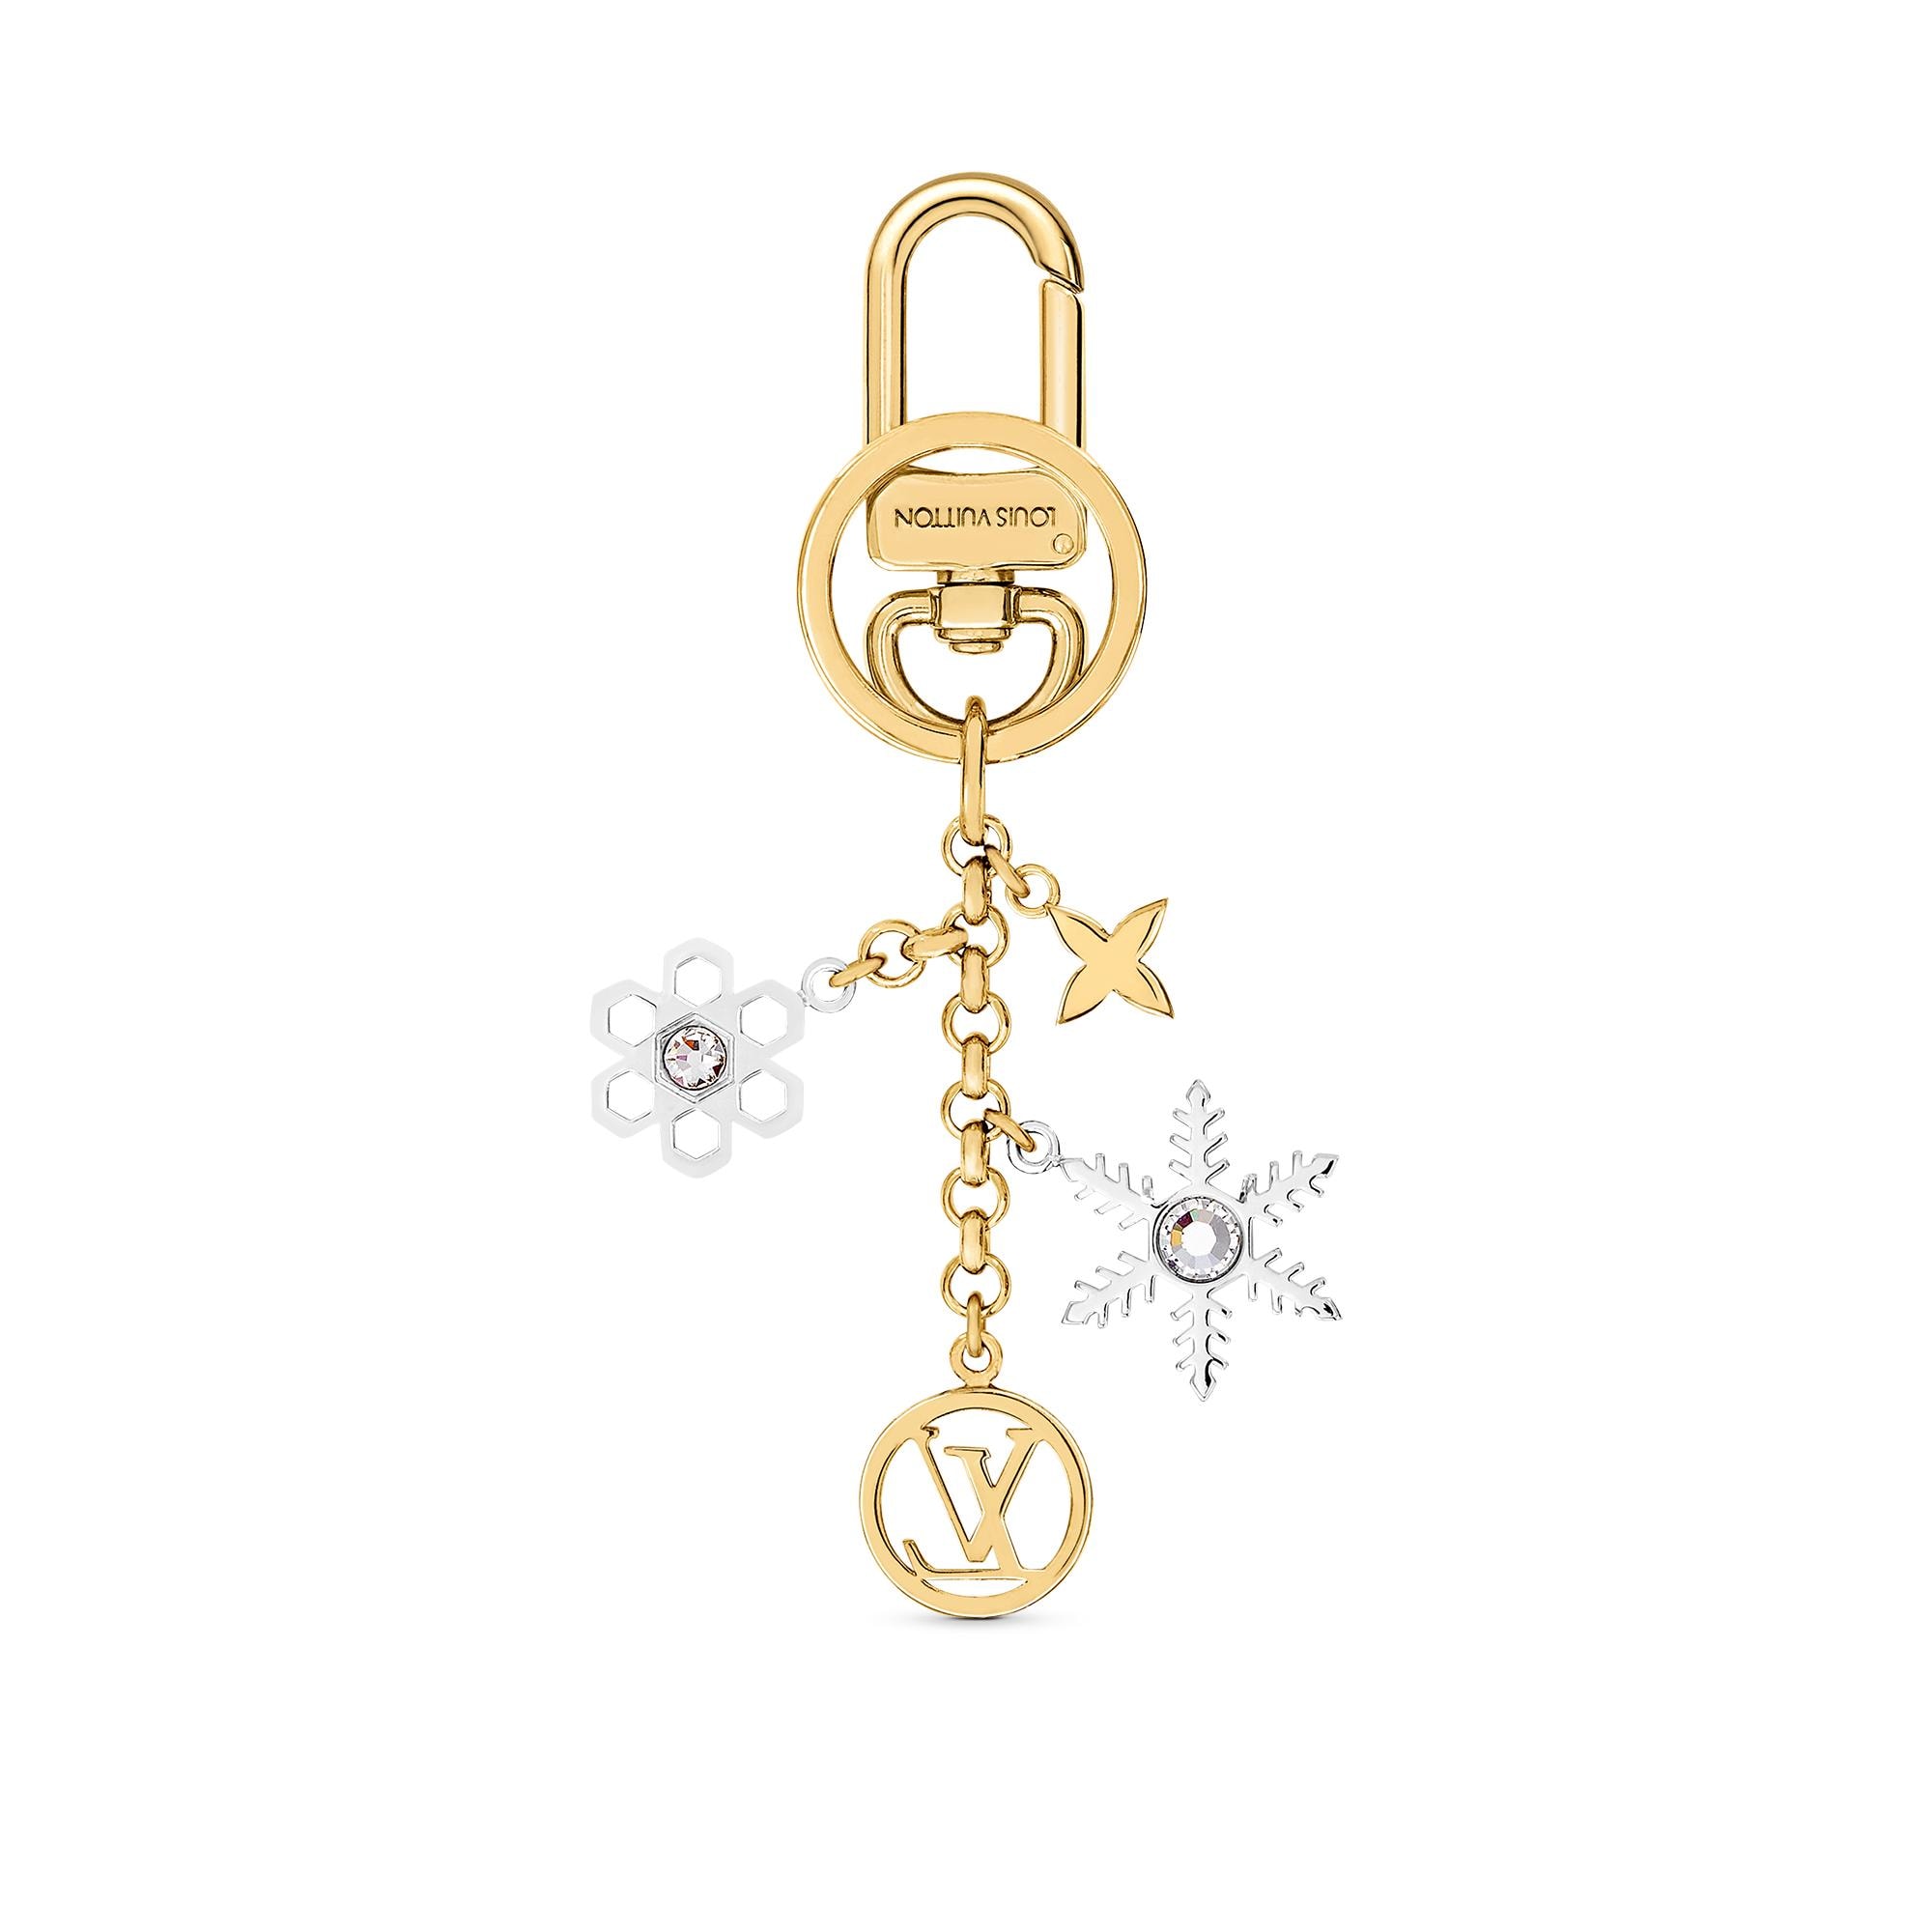 Bag charm Louis Vuitton Gold in Metal - 31833572